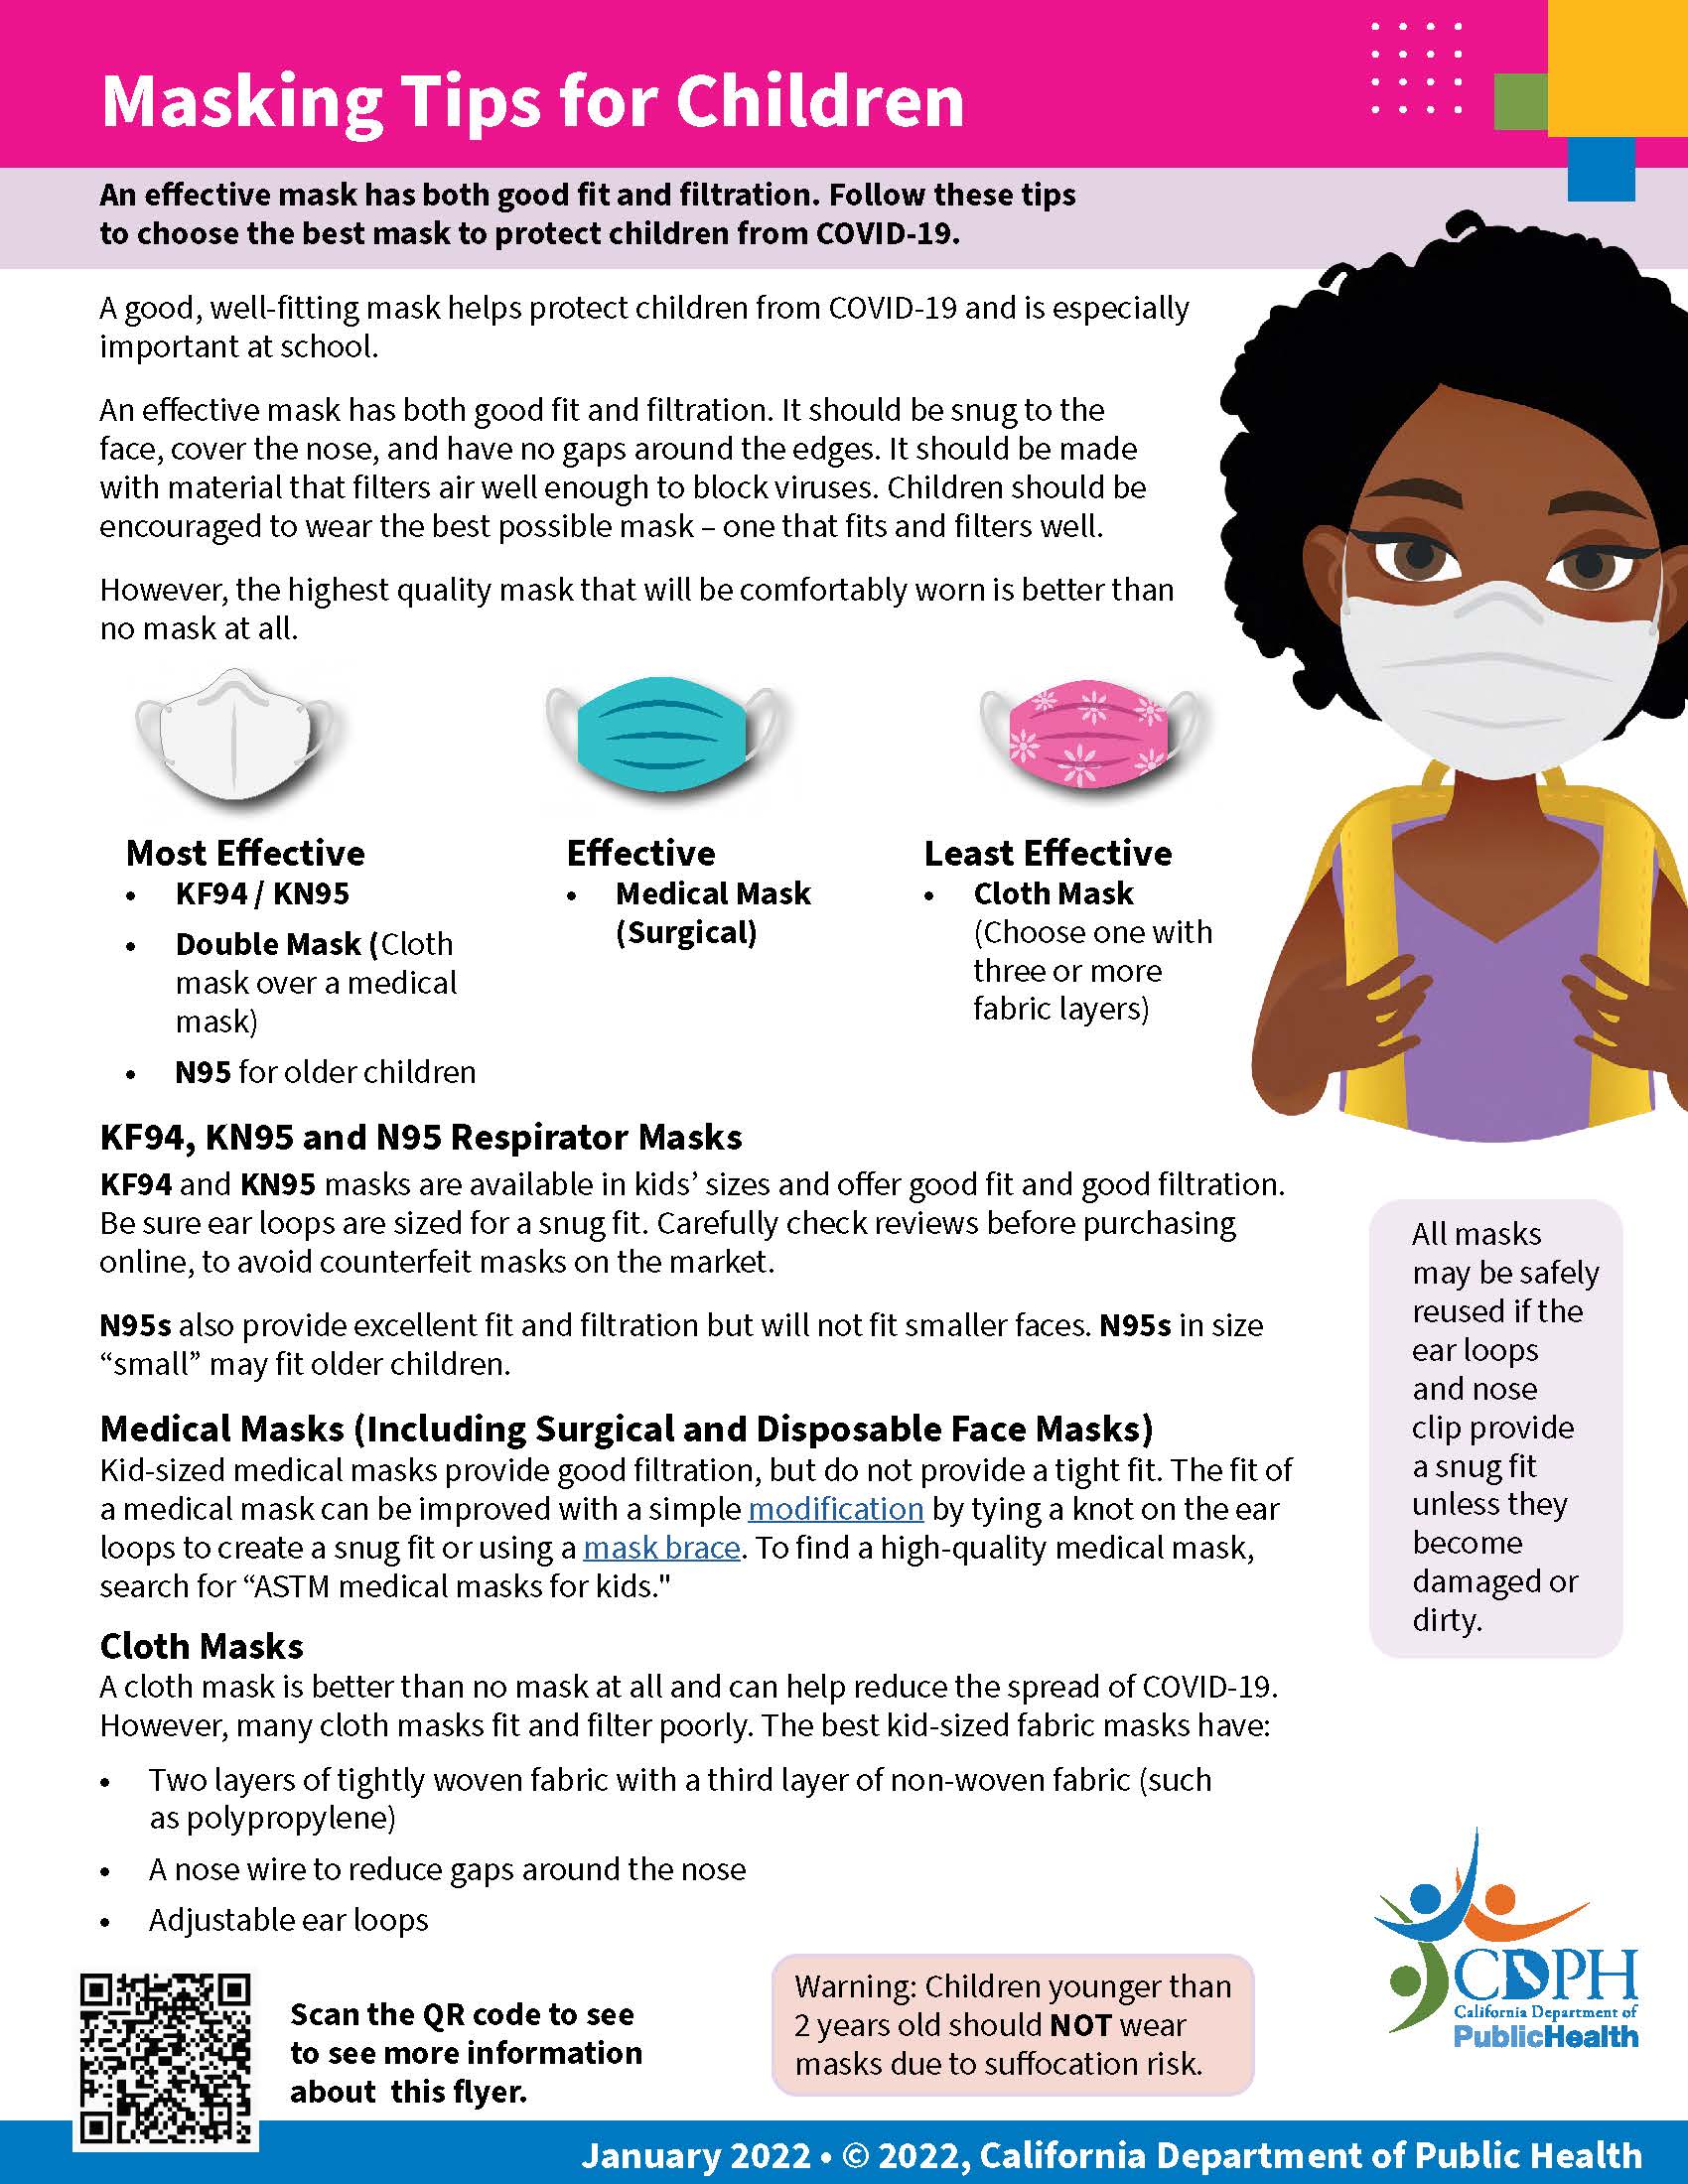 Masking Tips for Kids Fact Sheet Preview